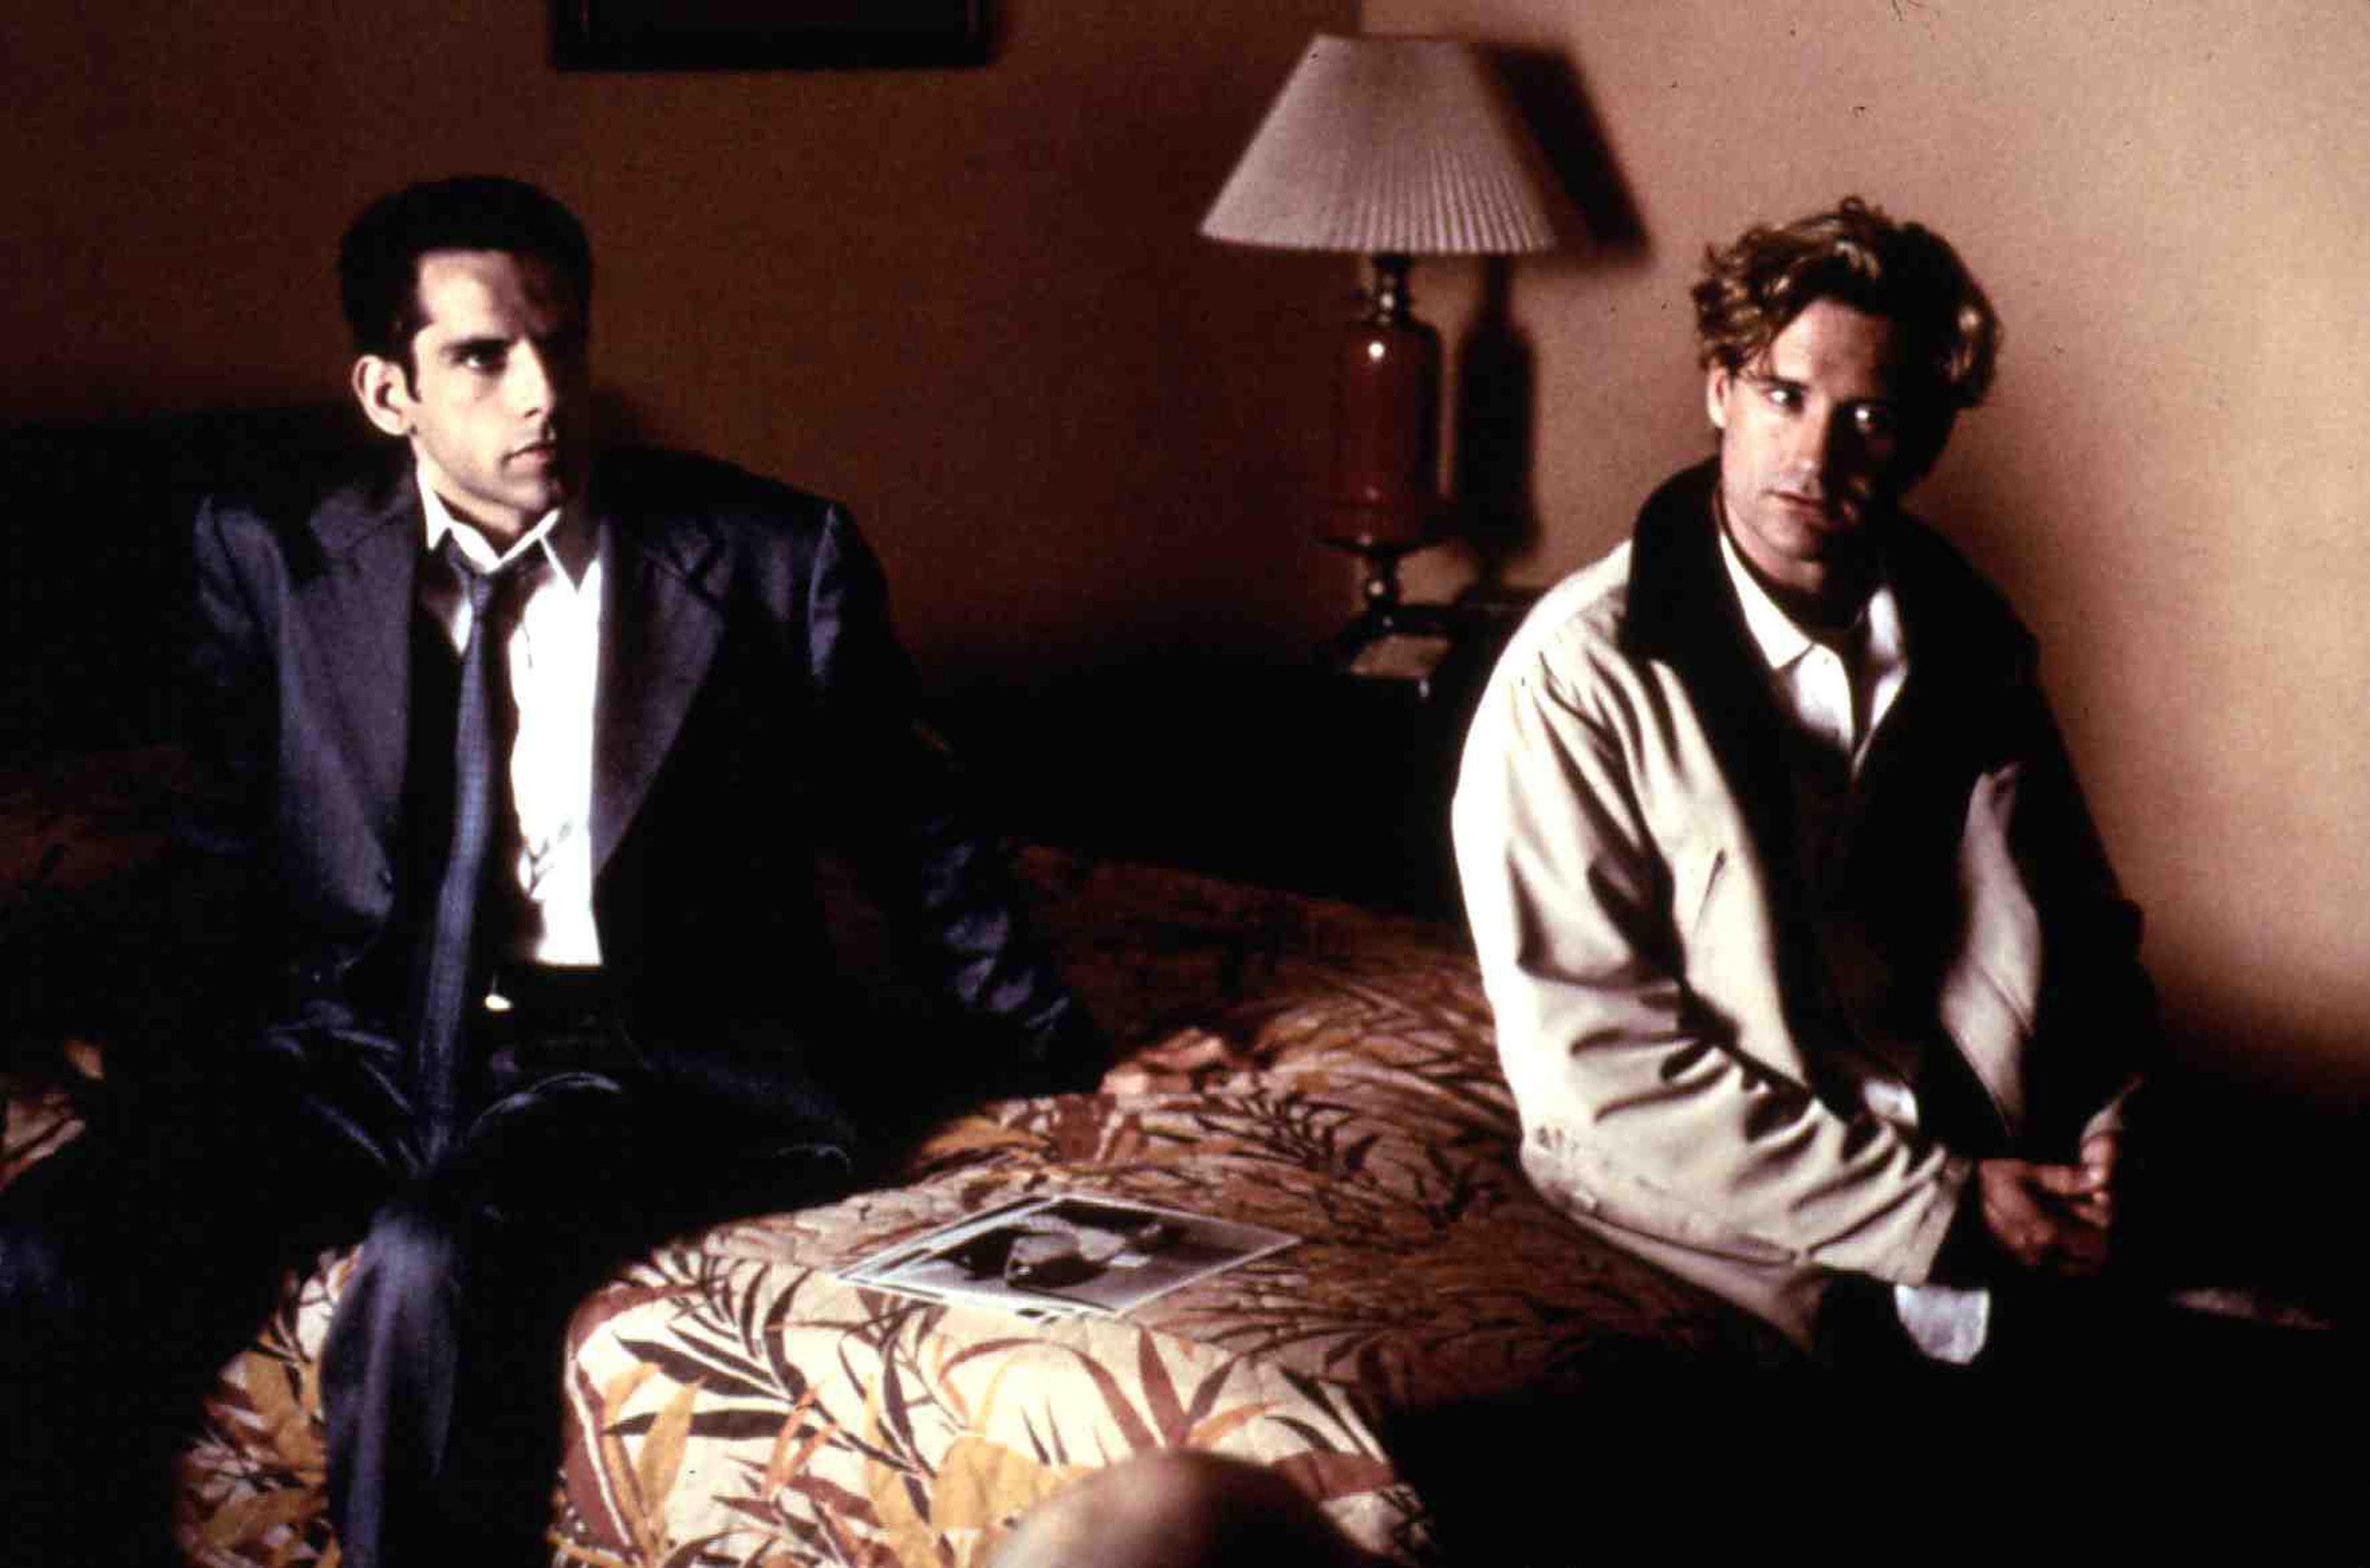 Ben Stiller and Bill Pullman sit on a bed near some photographs